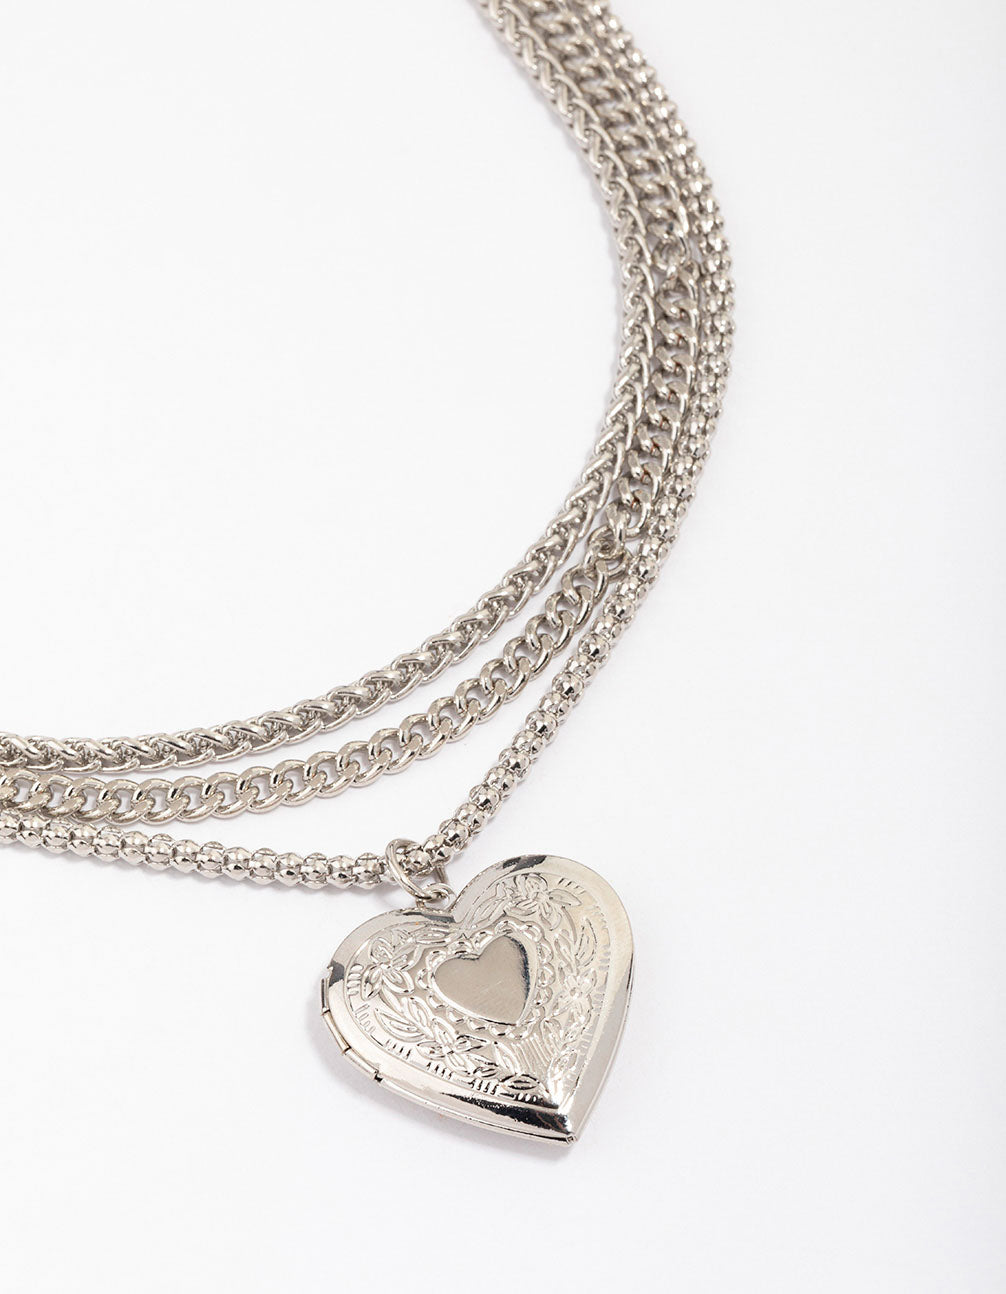 Return To Tiffany & Co Pink Enamel Double Heart Pendant Necklace Silver w/  Pouch | eBay